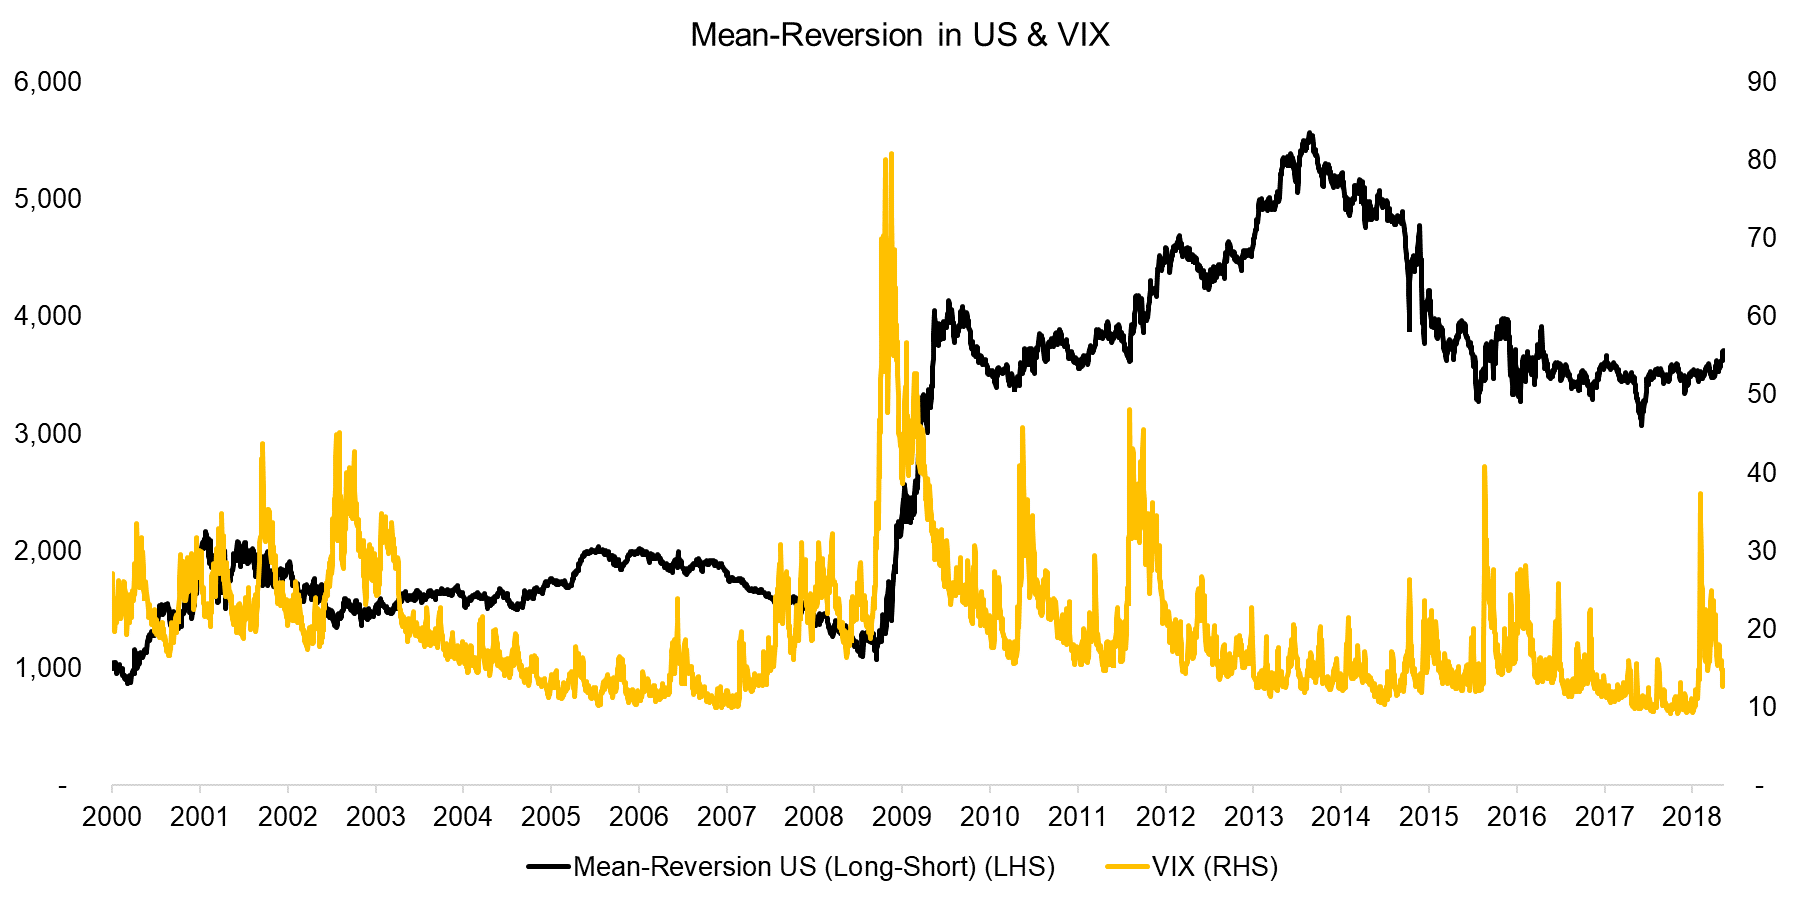 Mean-Reversion in US & VIX